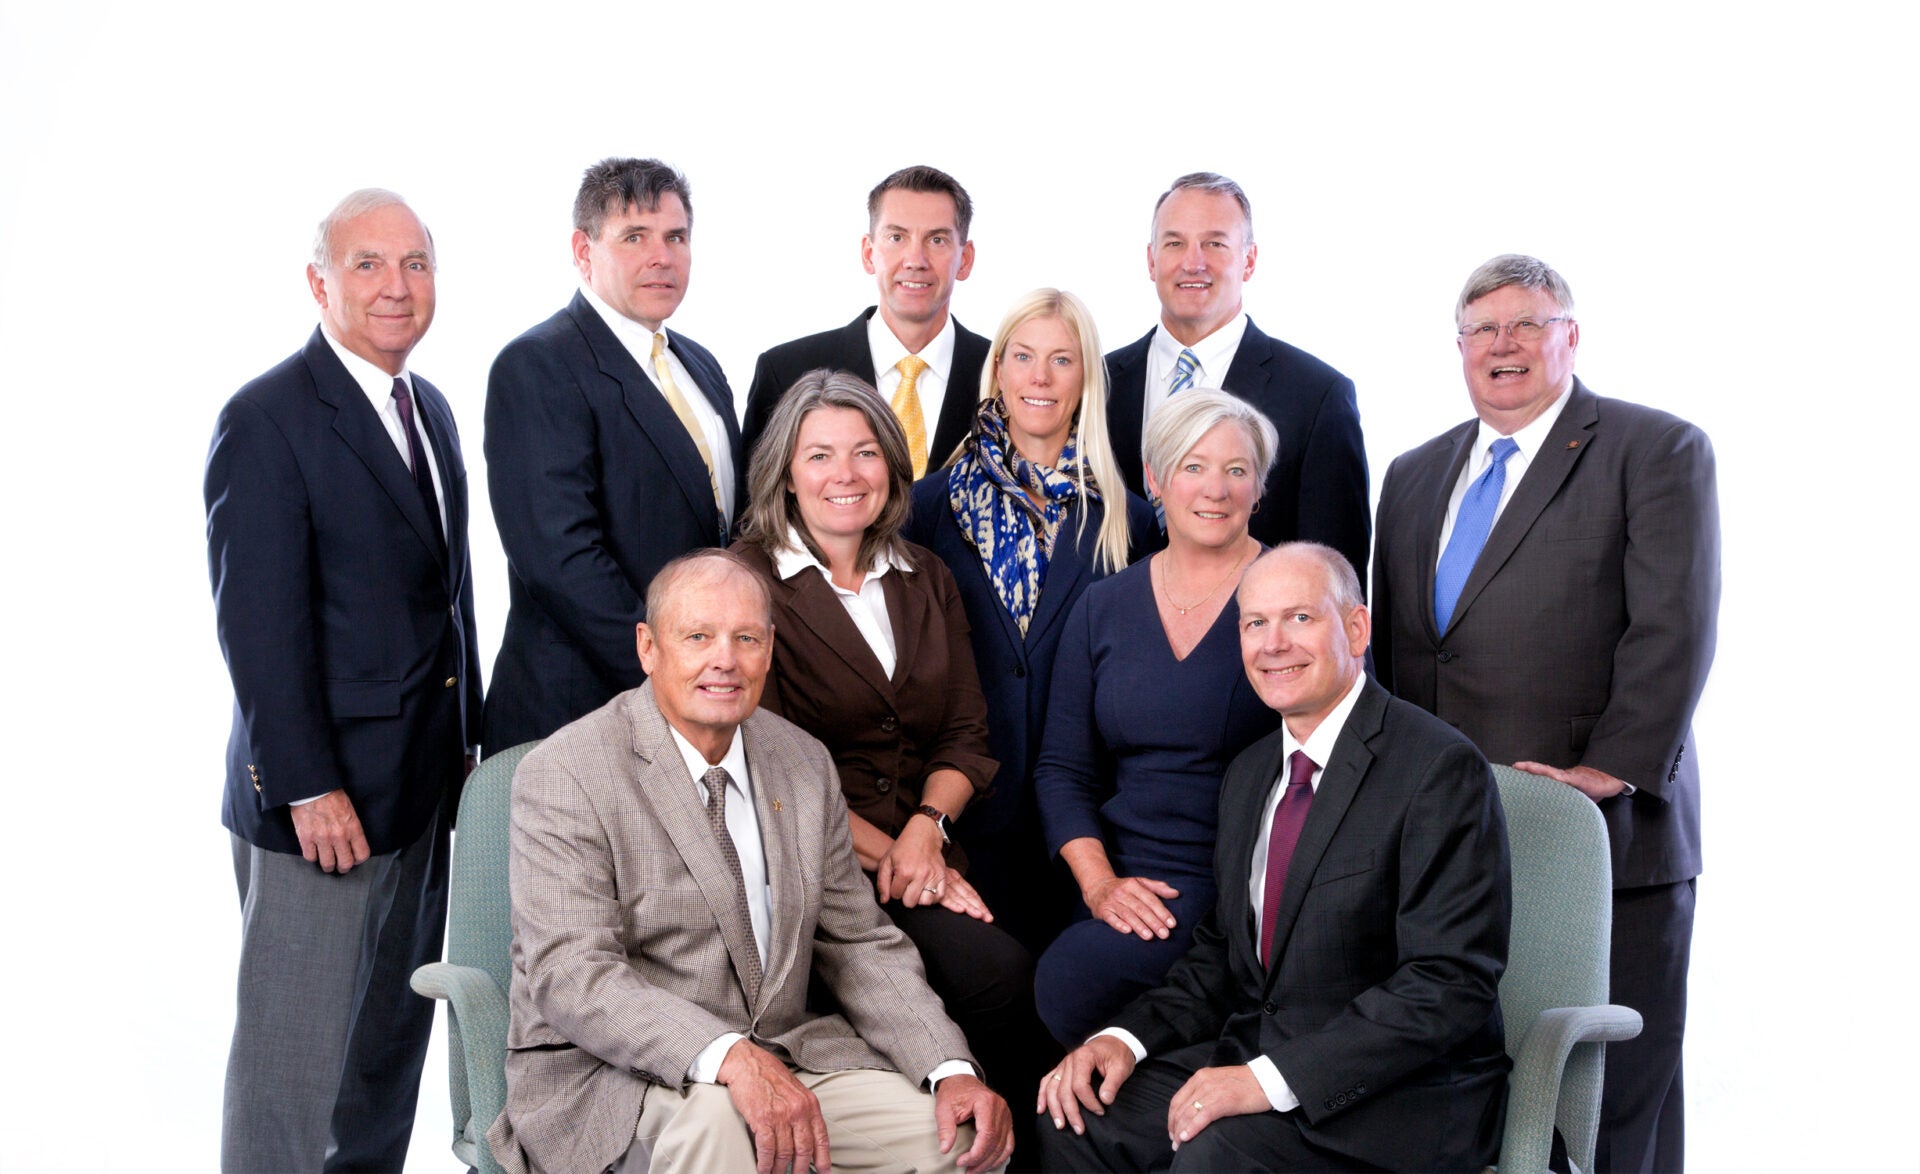 Fall River Board of Directors